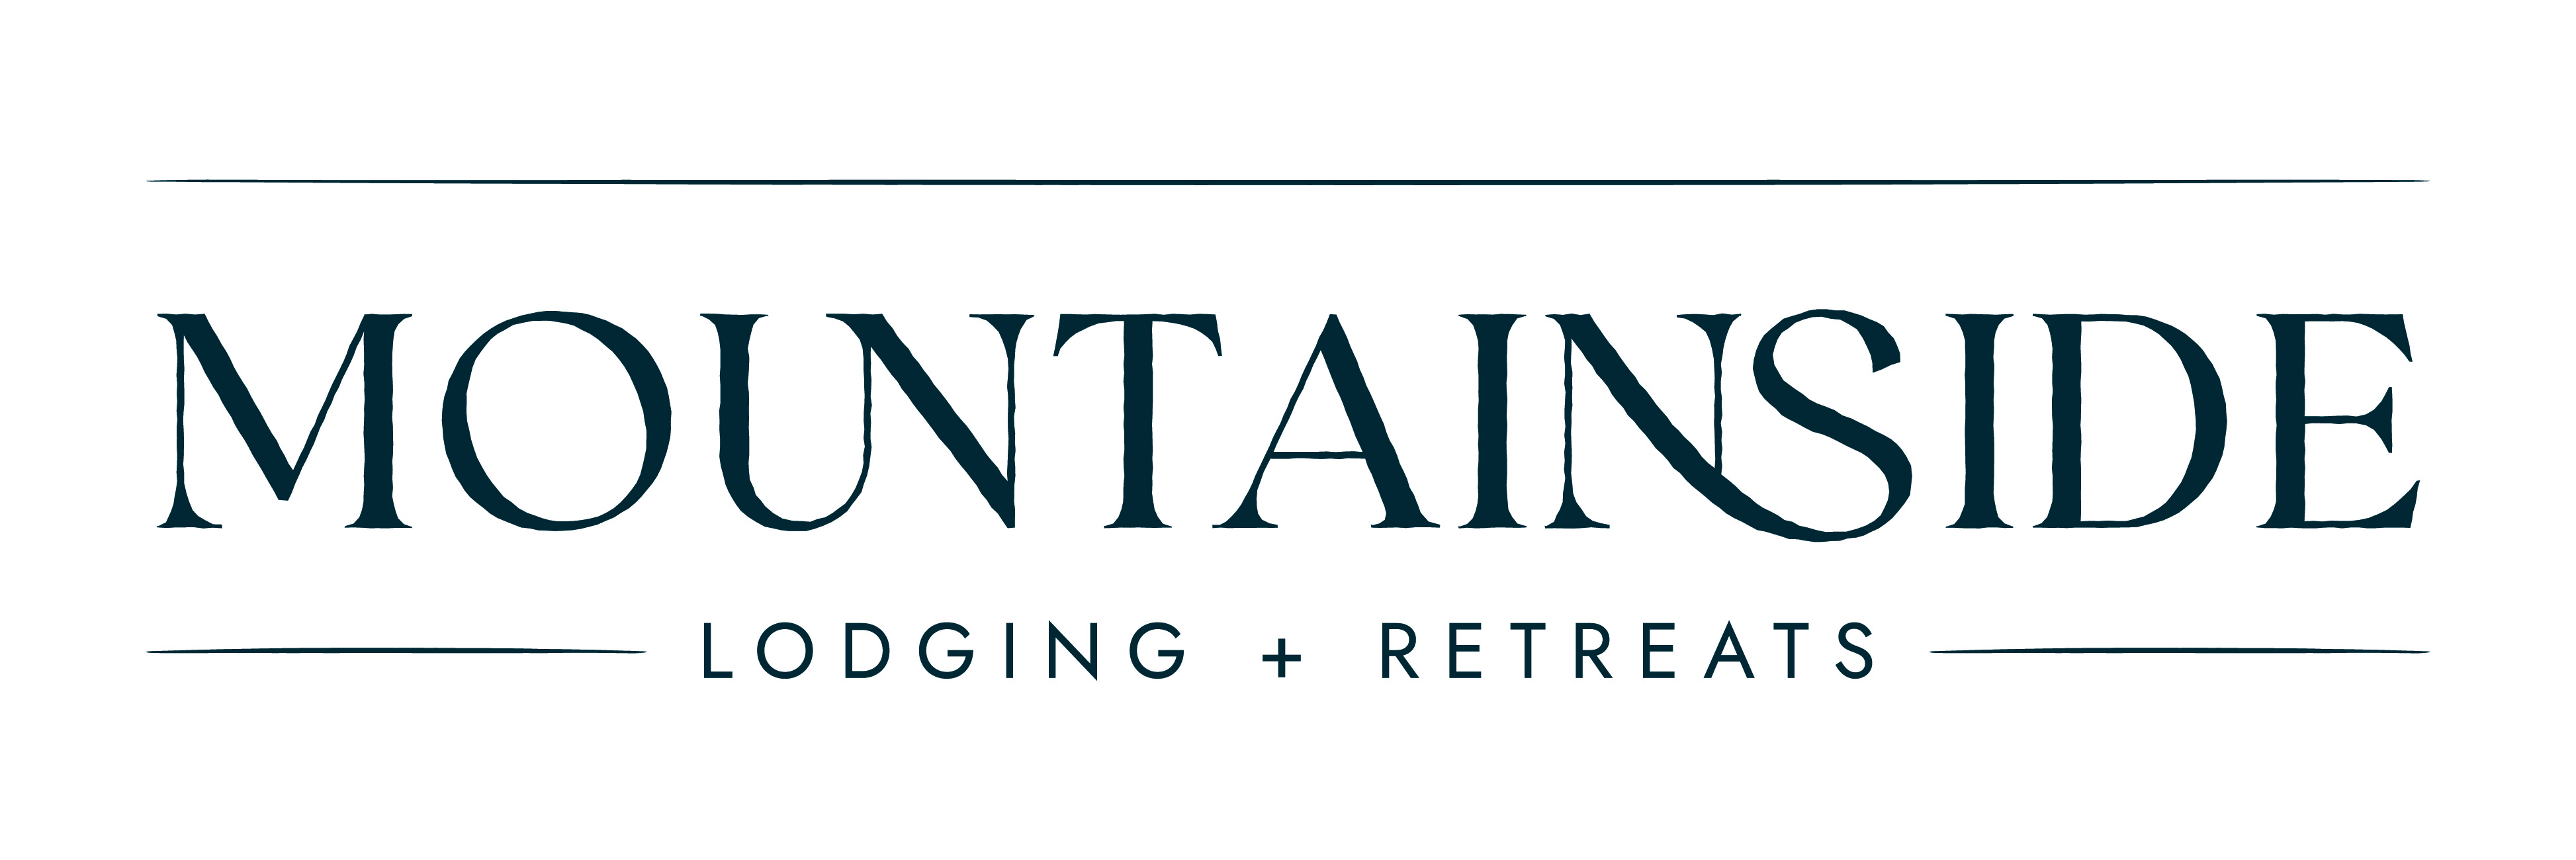 Mountainside logo